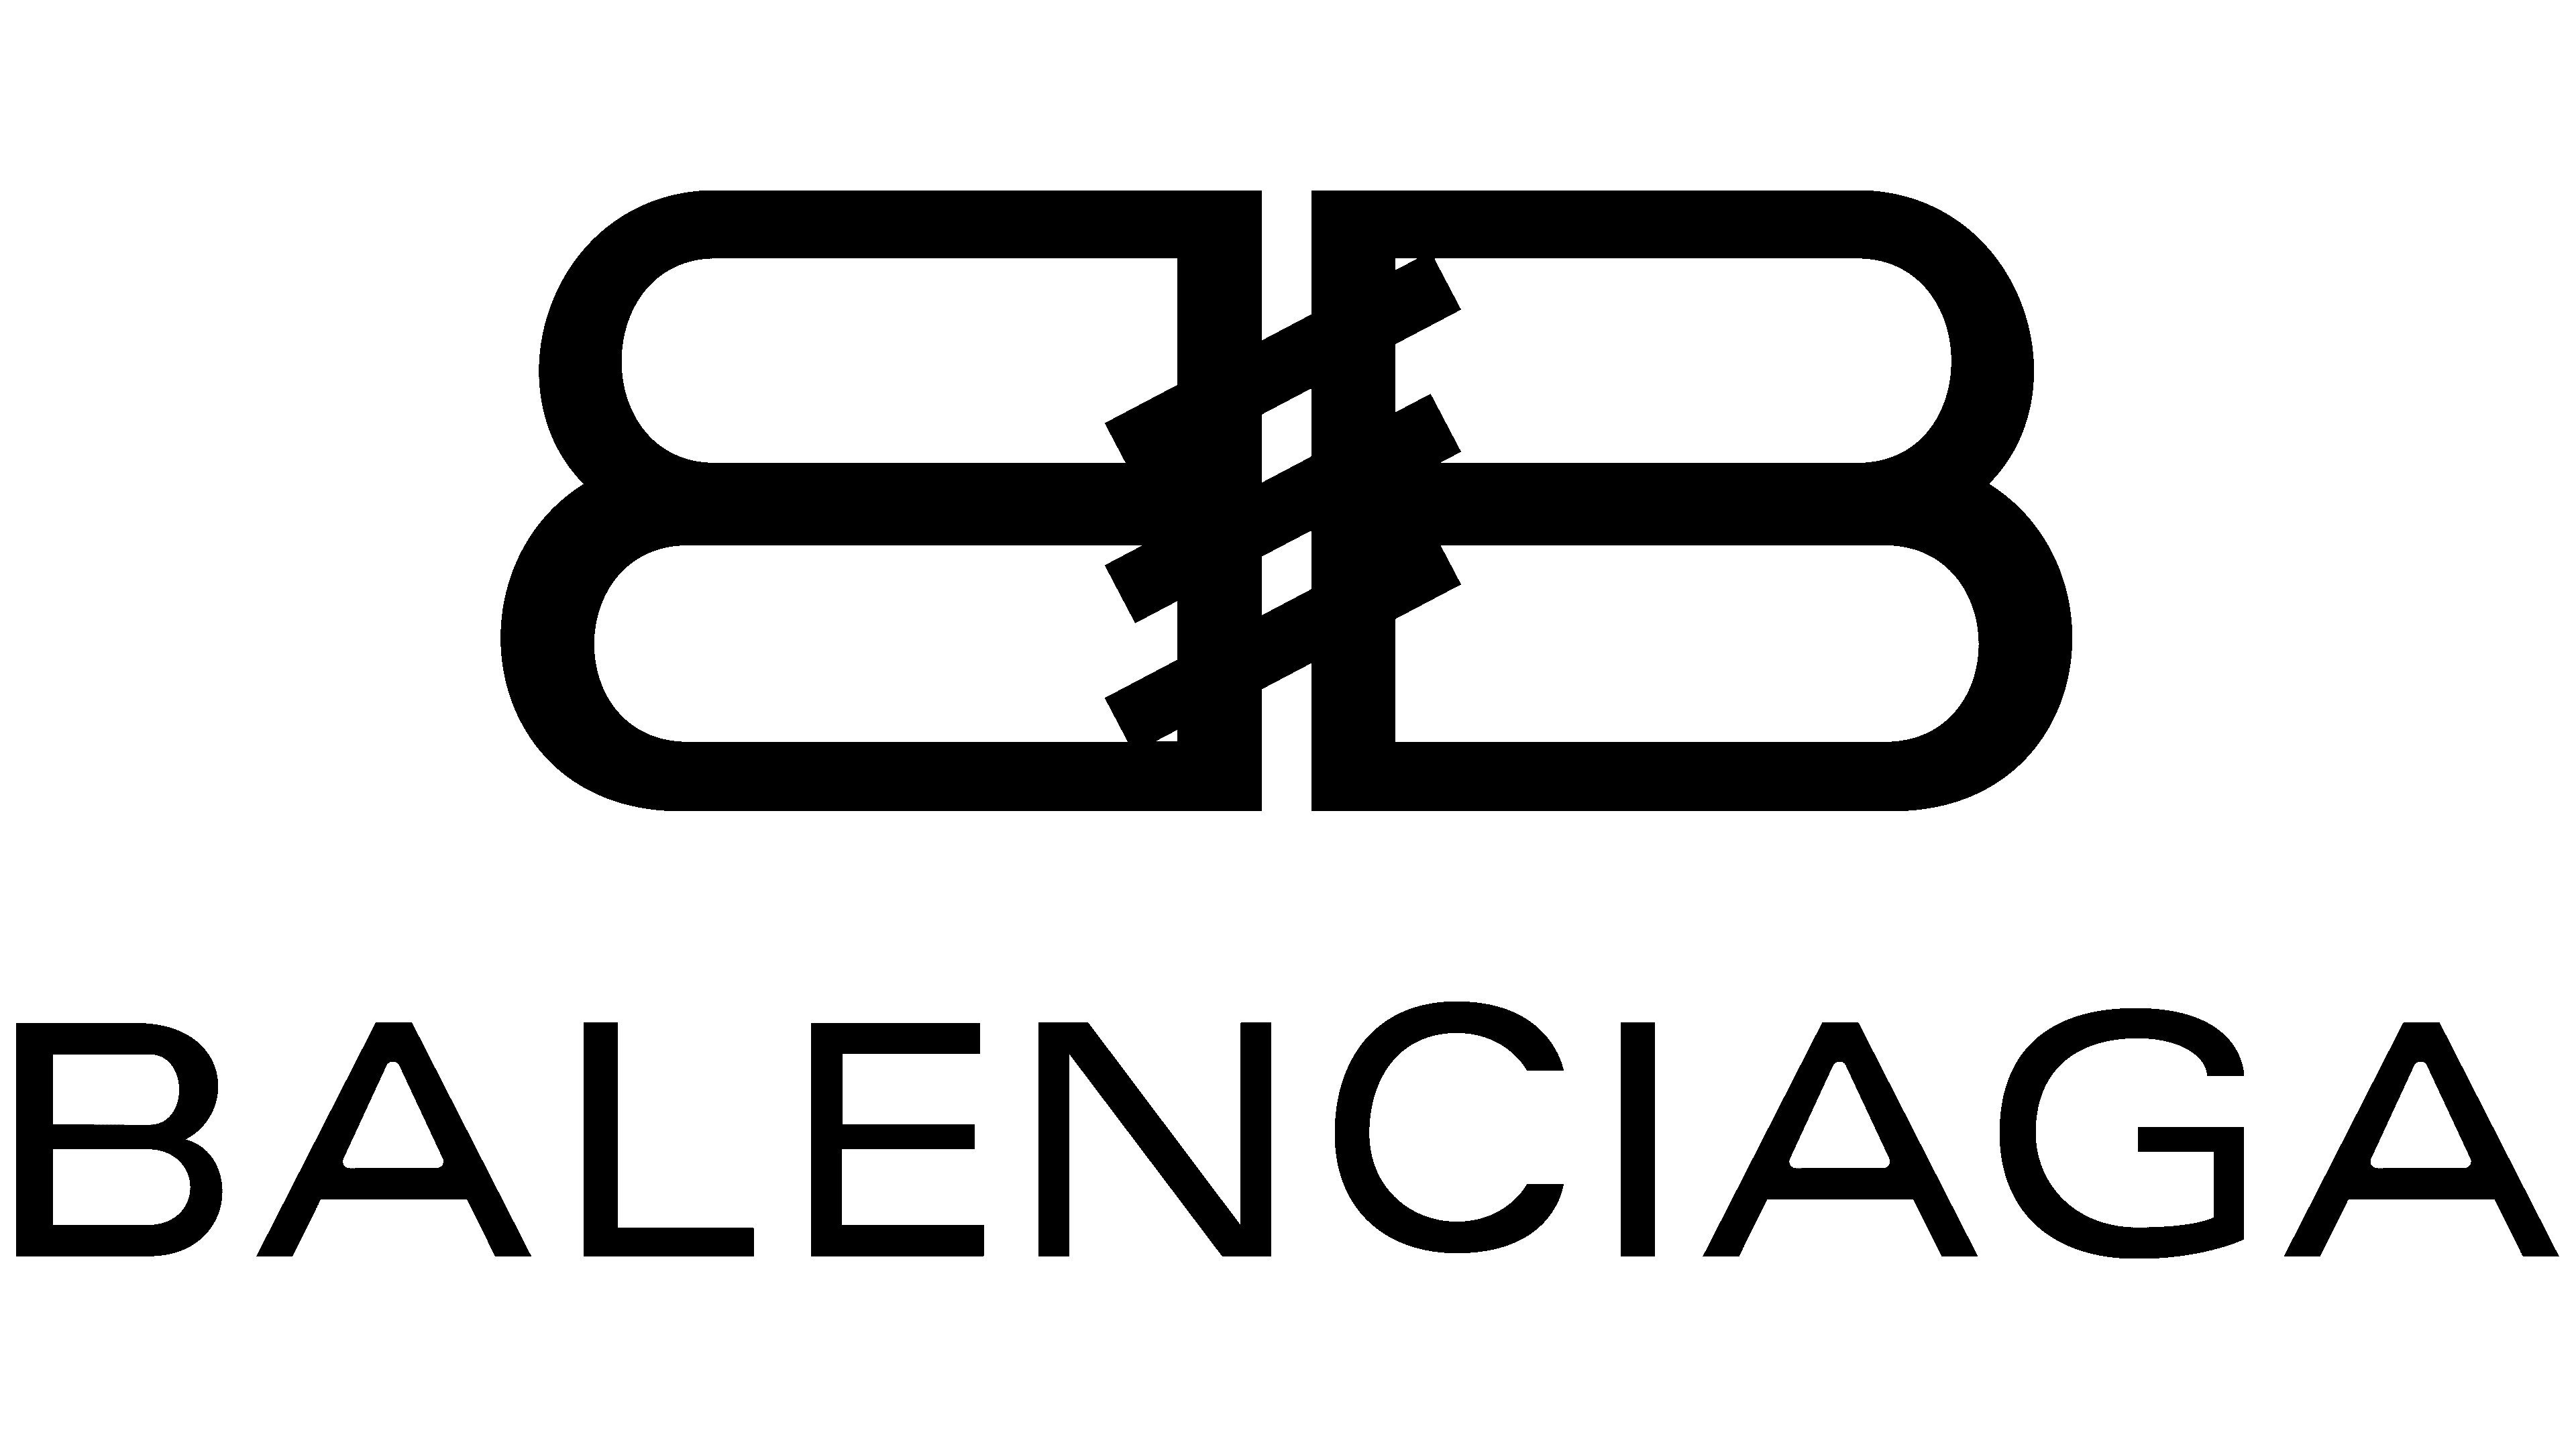 Meander innovation Anzai Balenciaga Logo, symbol, meaning, history, PNG, brand